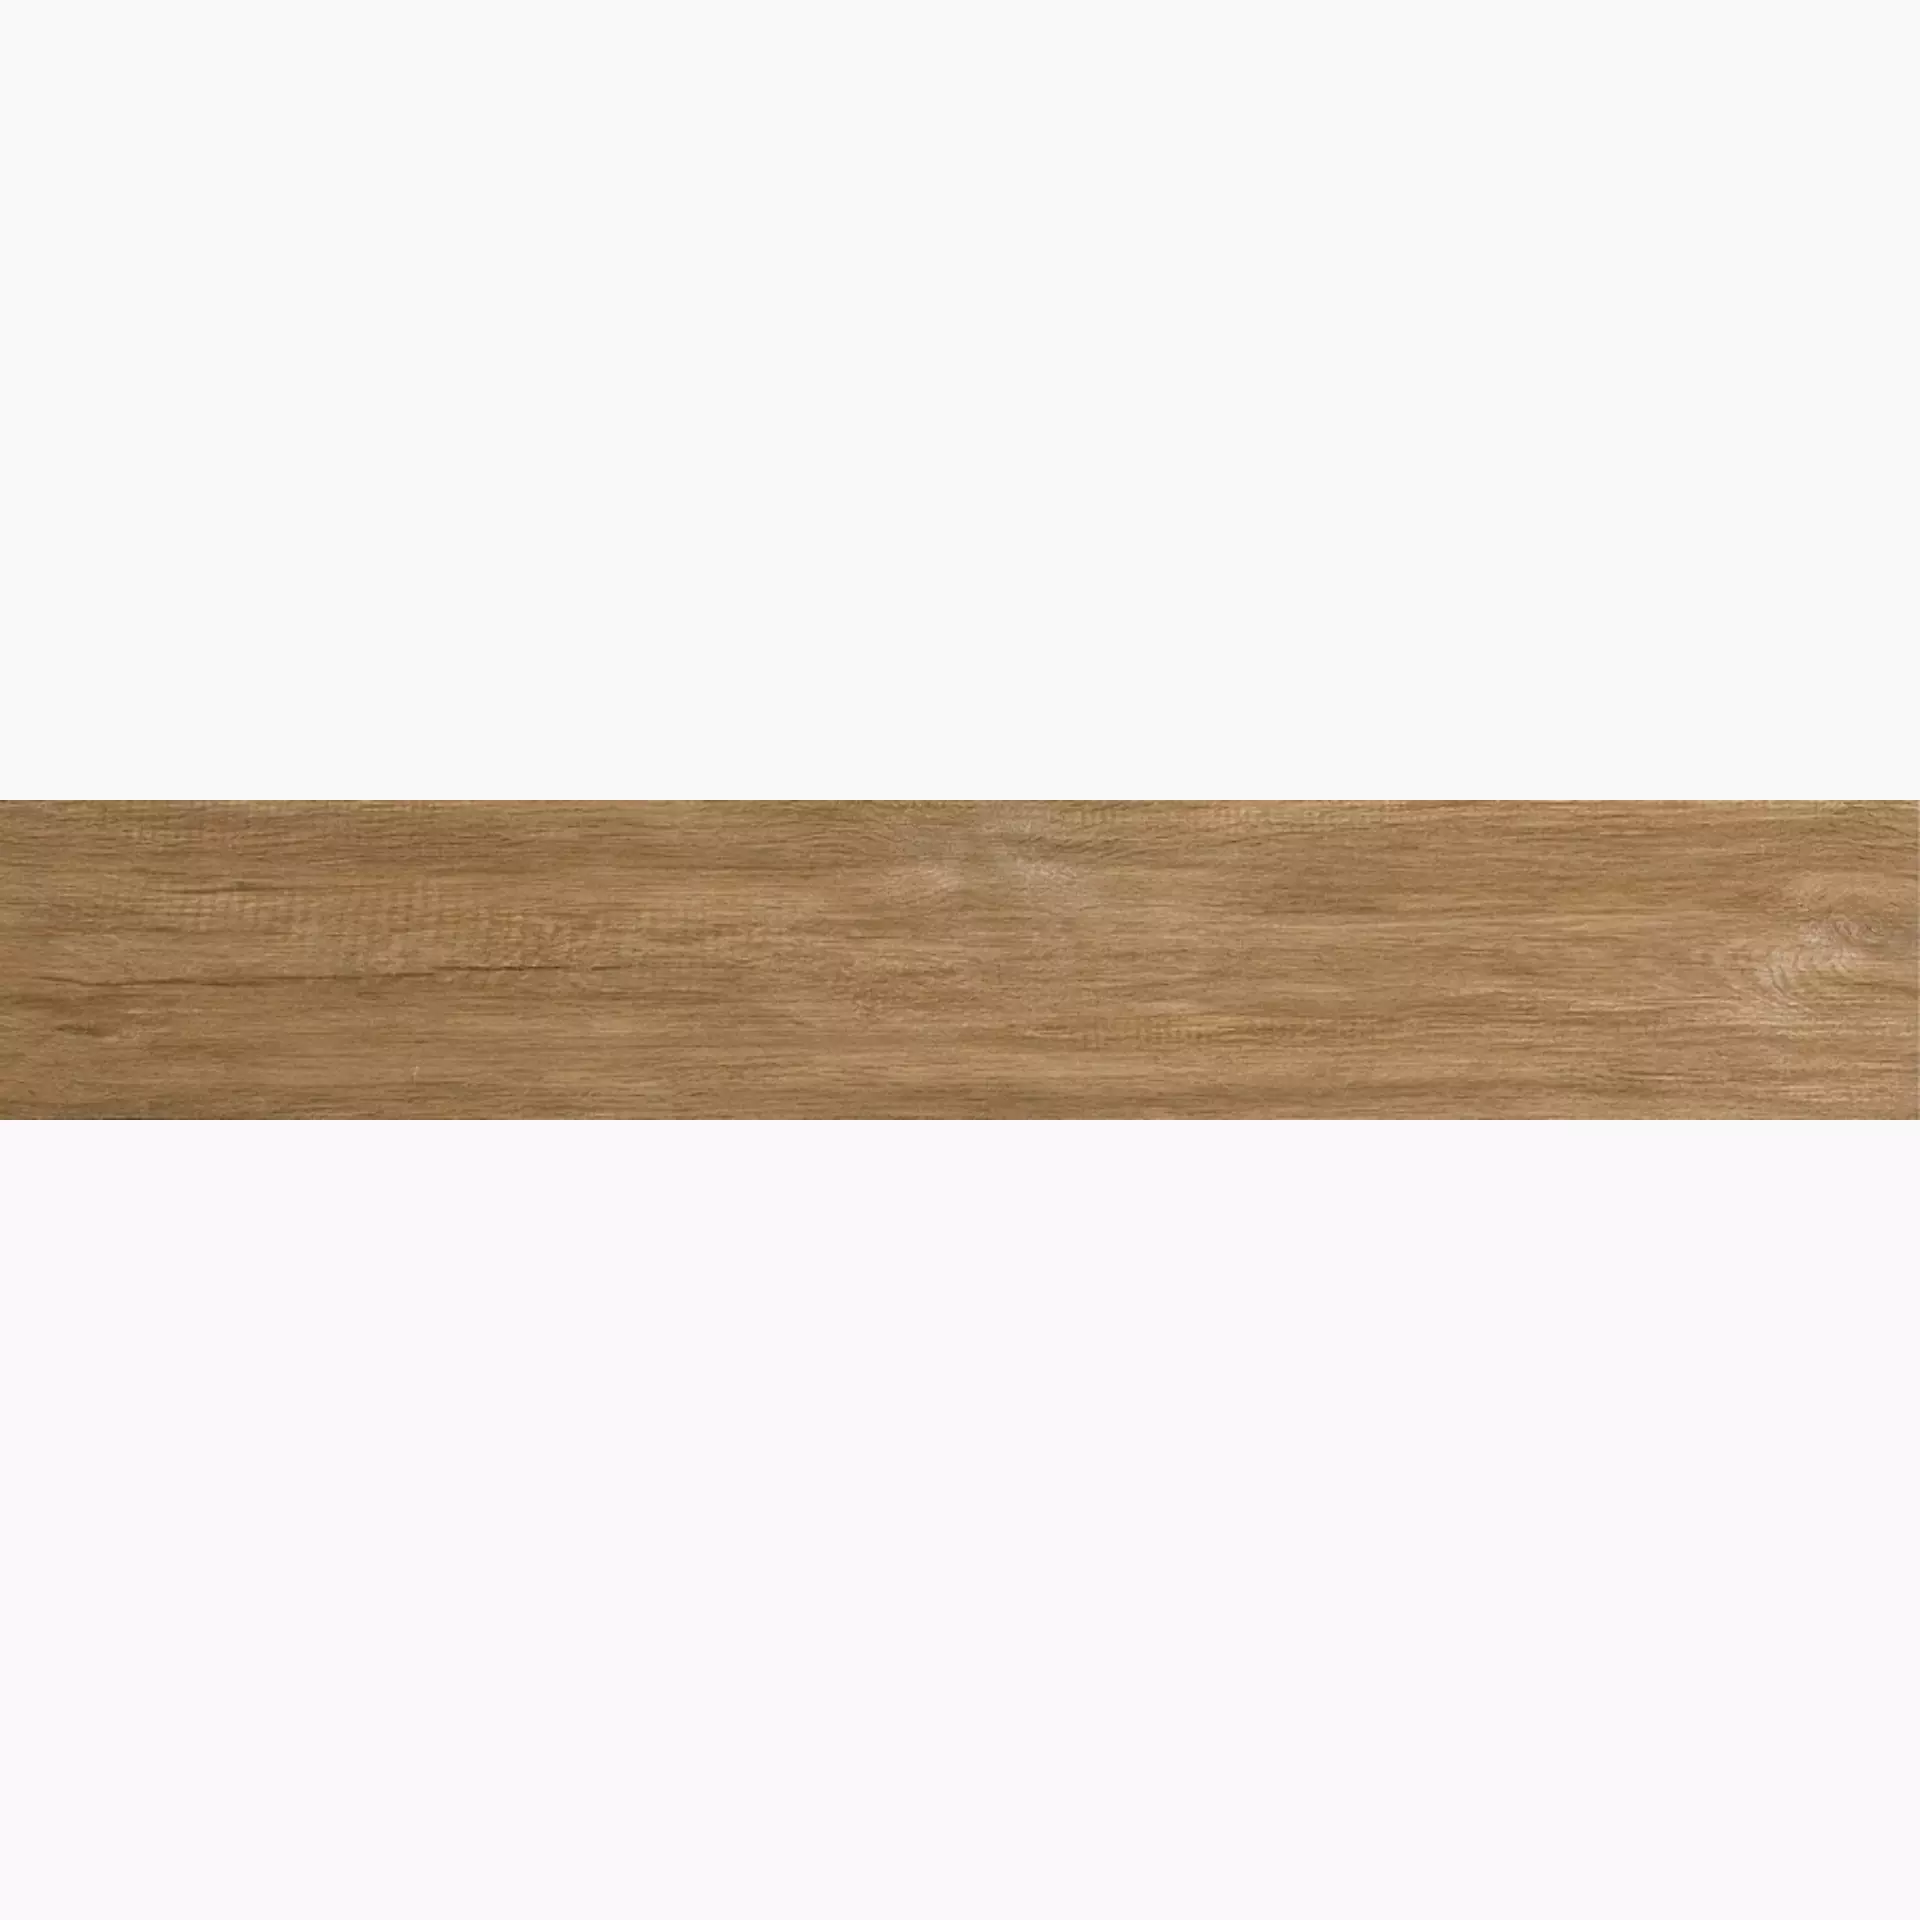 Iris E-Wood Blonde Antislip 894018 15x90cm 9mm